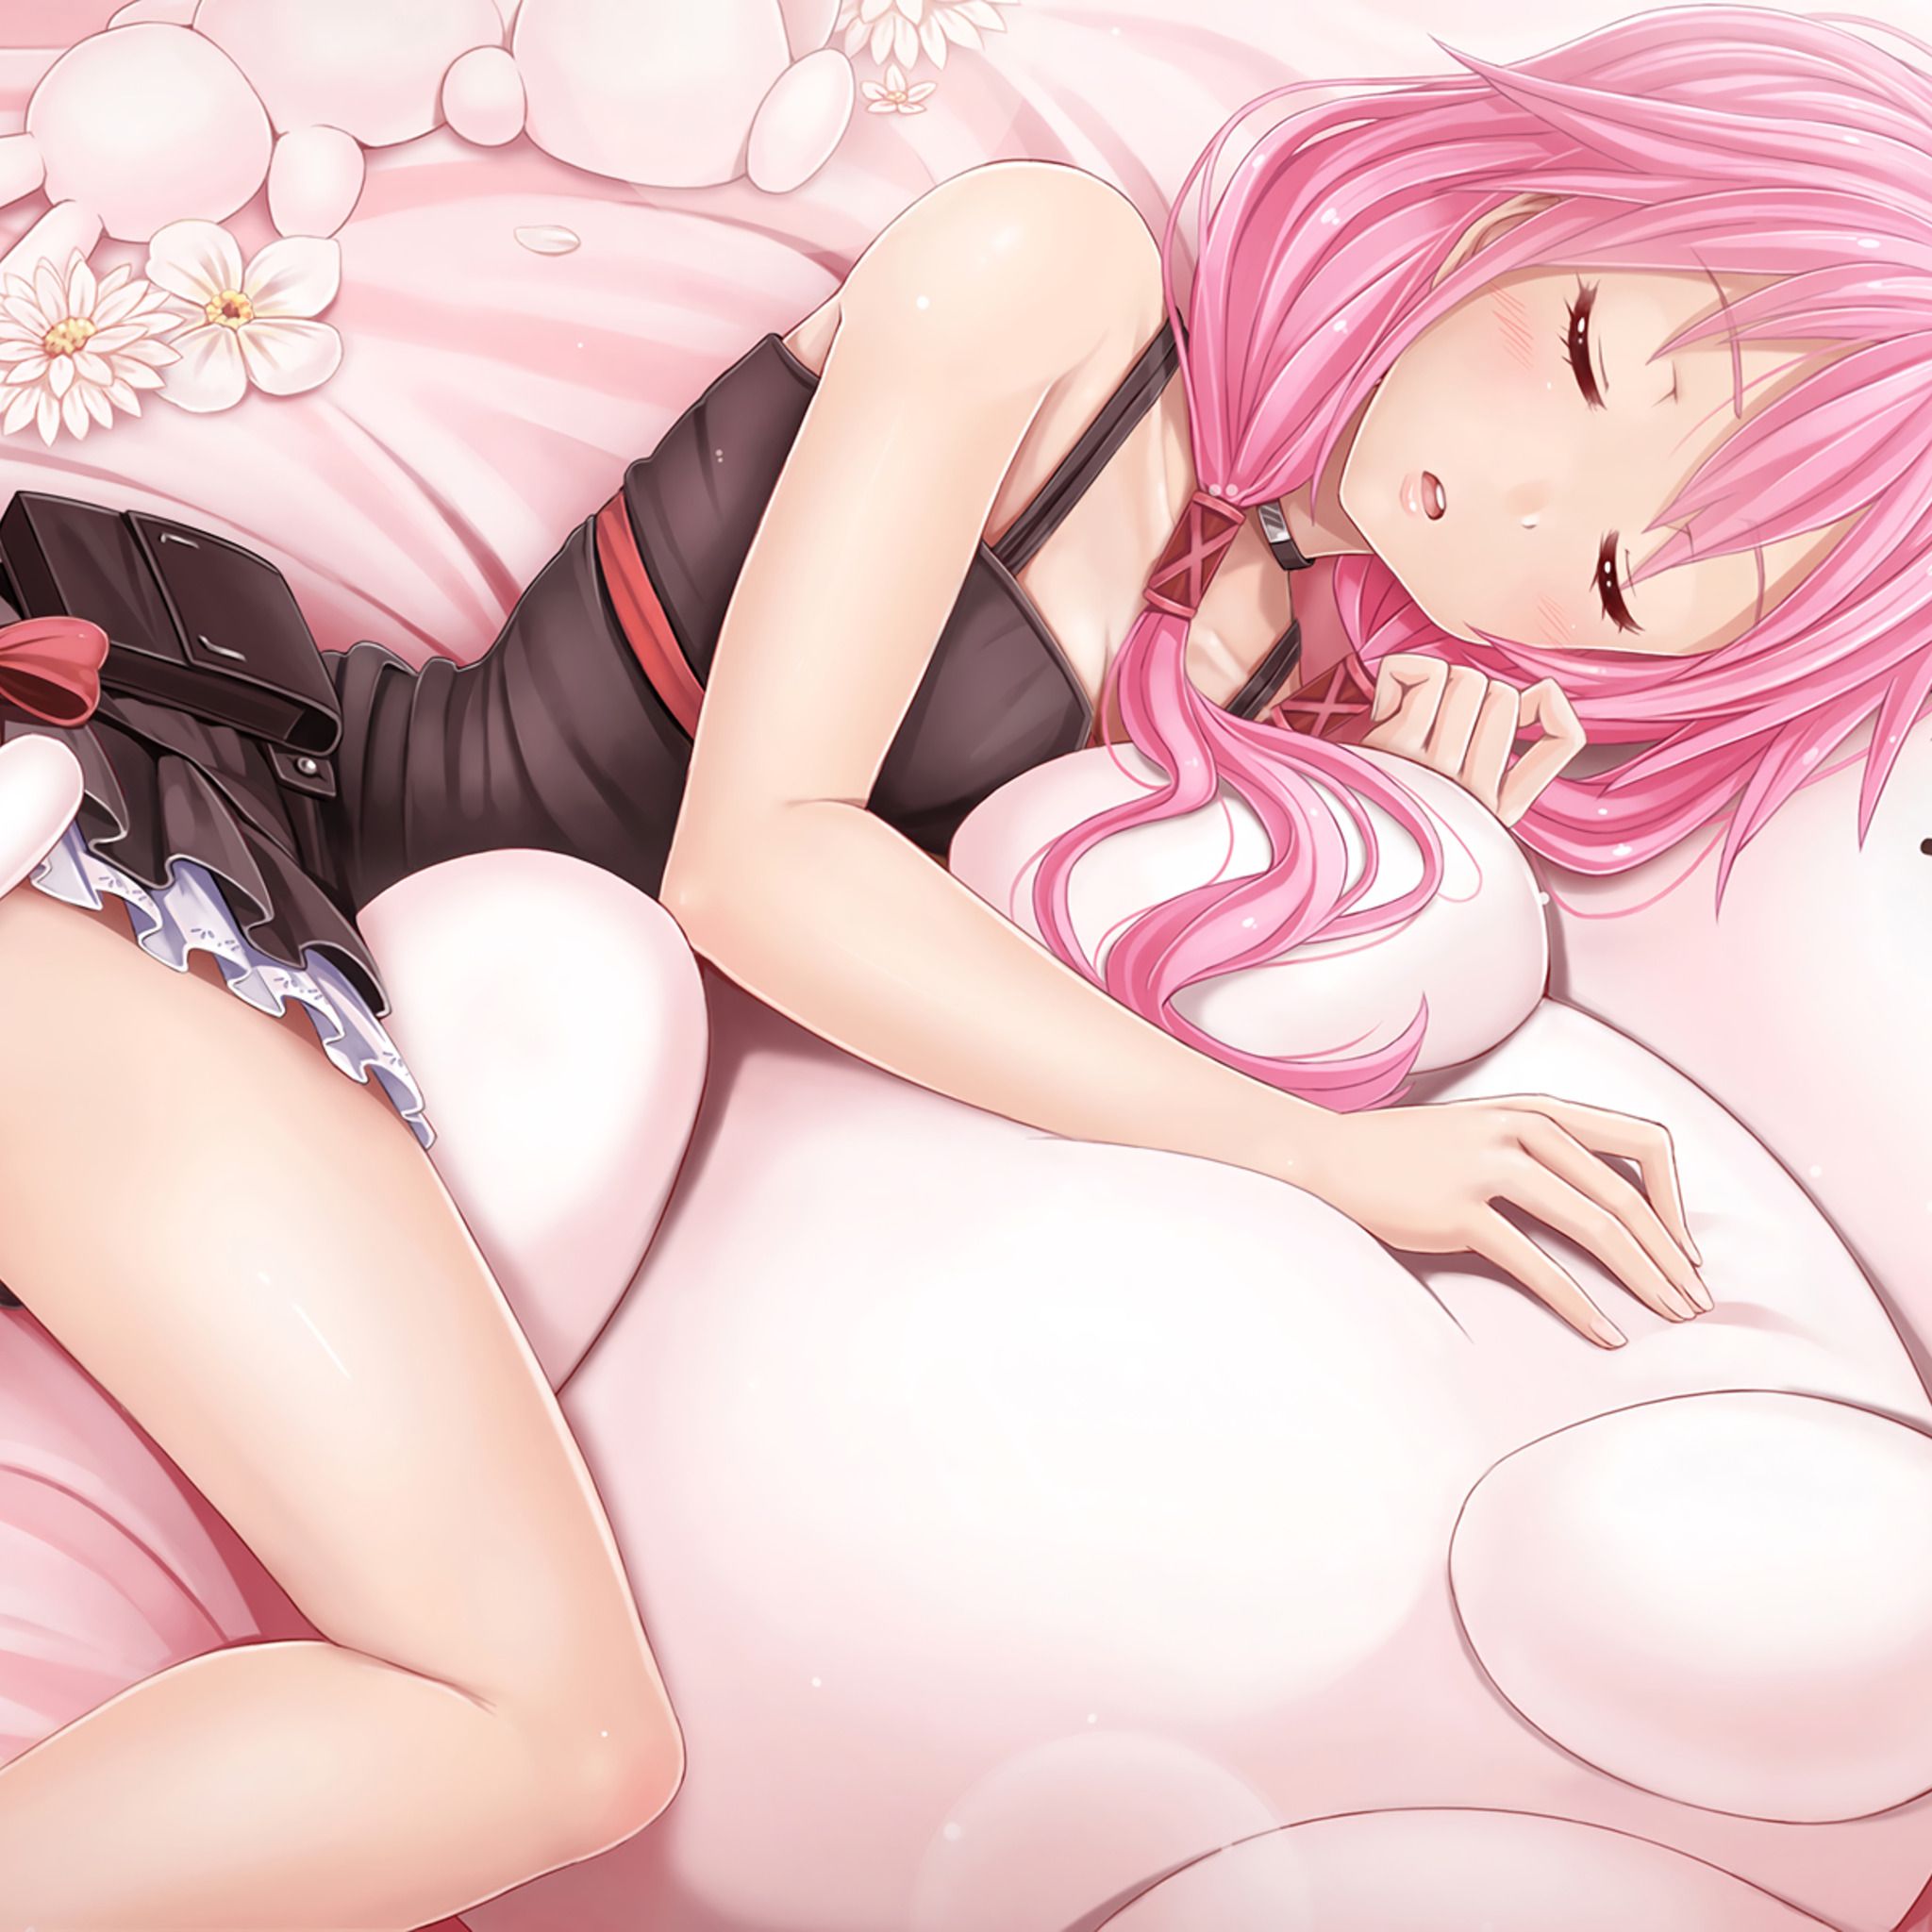 Anime Girl Sleeping iPad Air HD 4k Wallpaper, Image